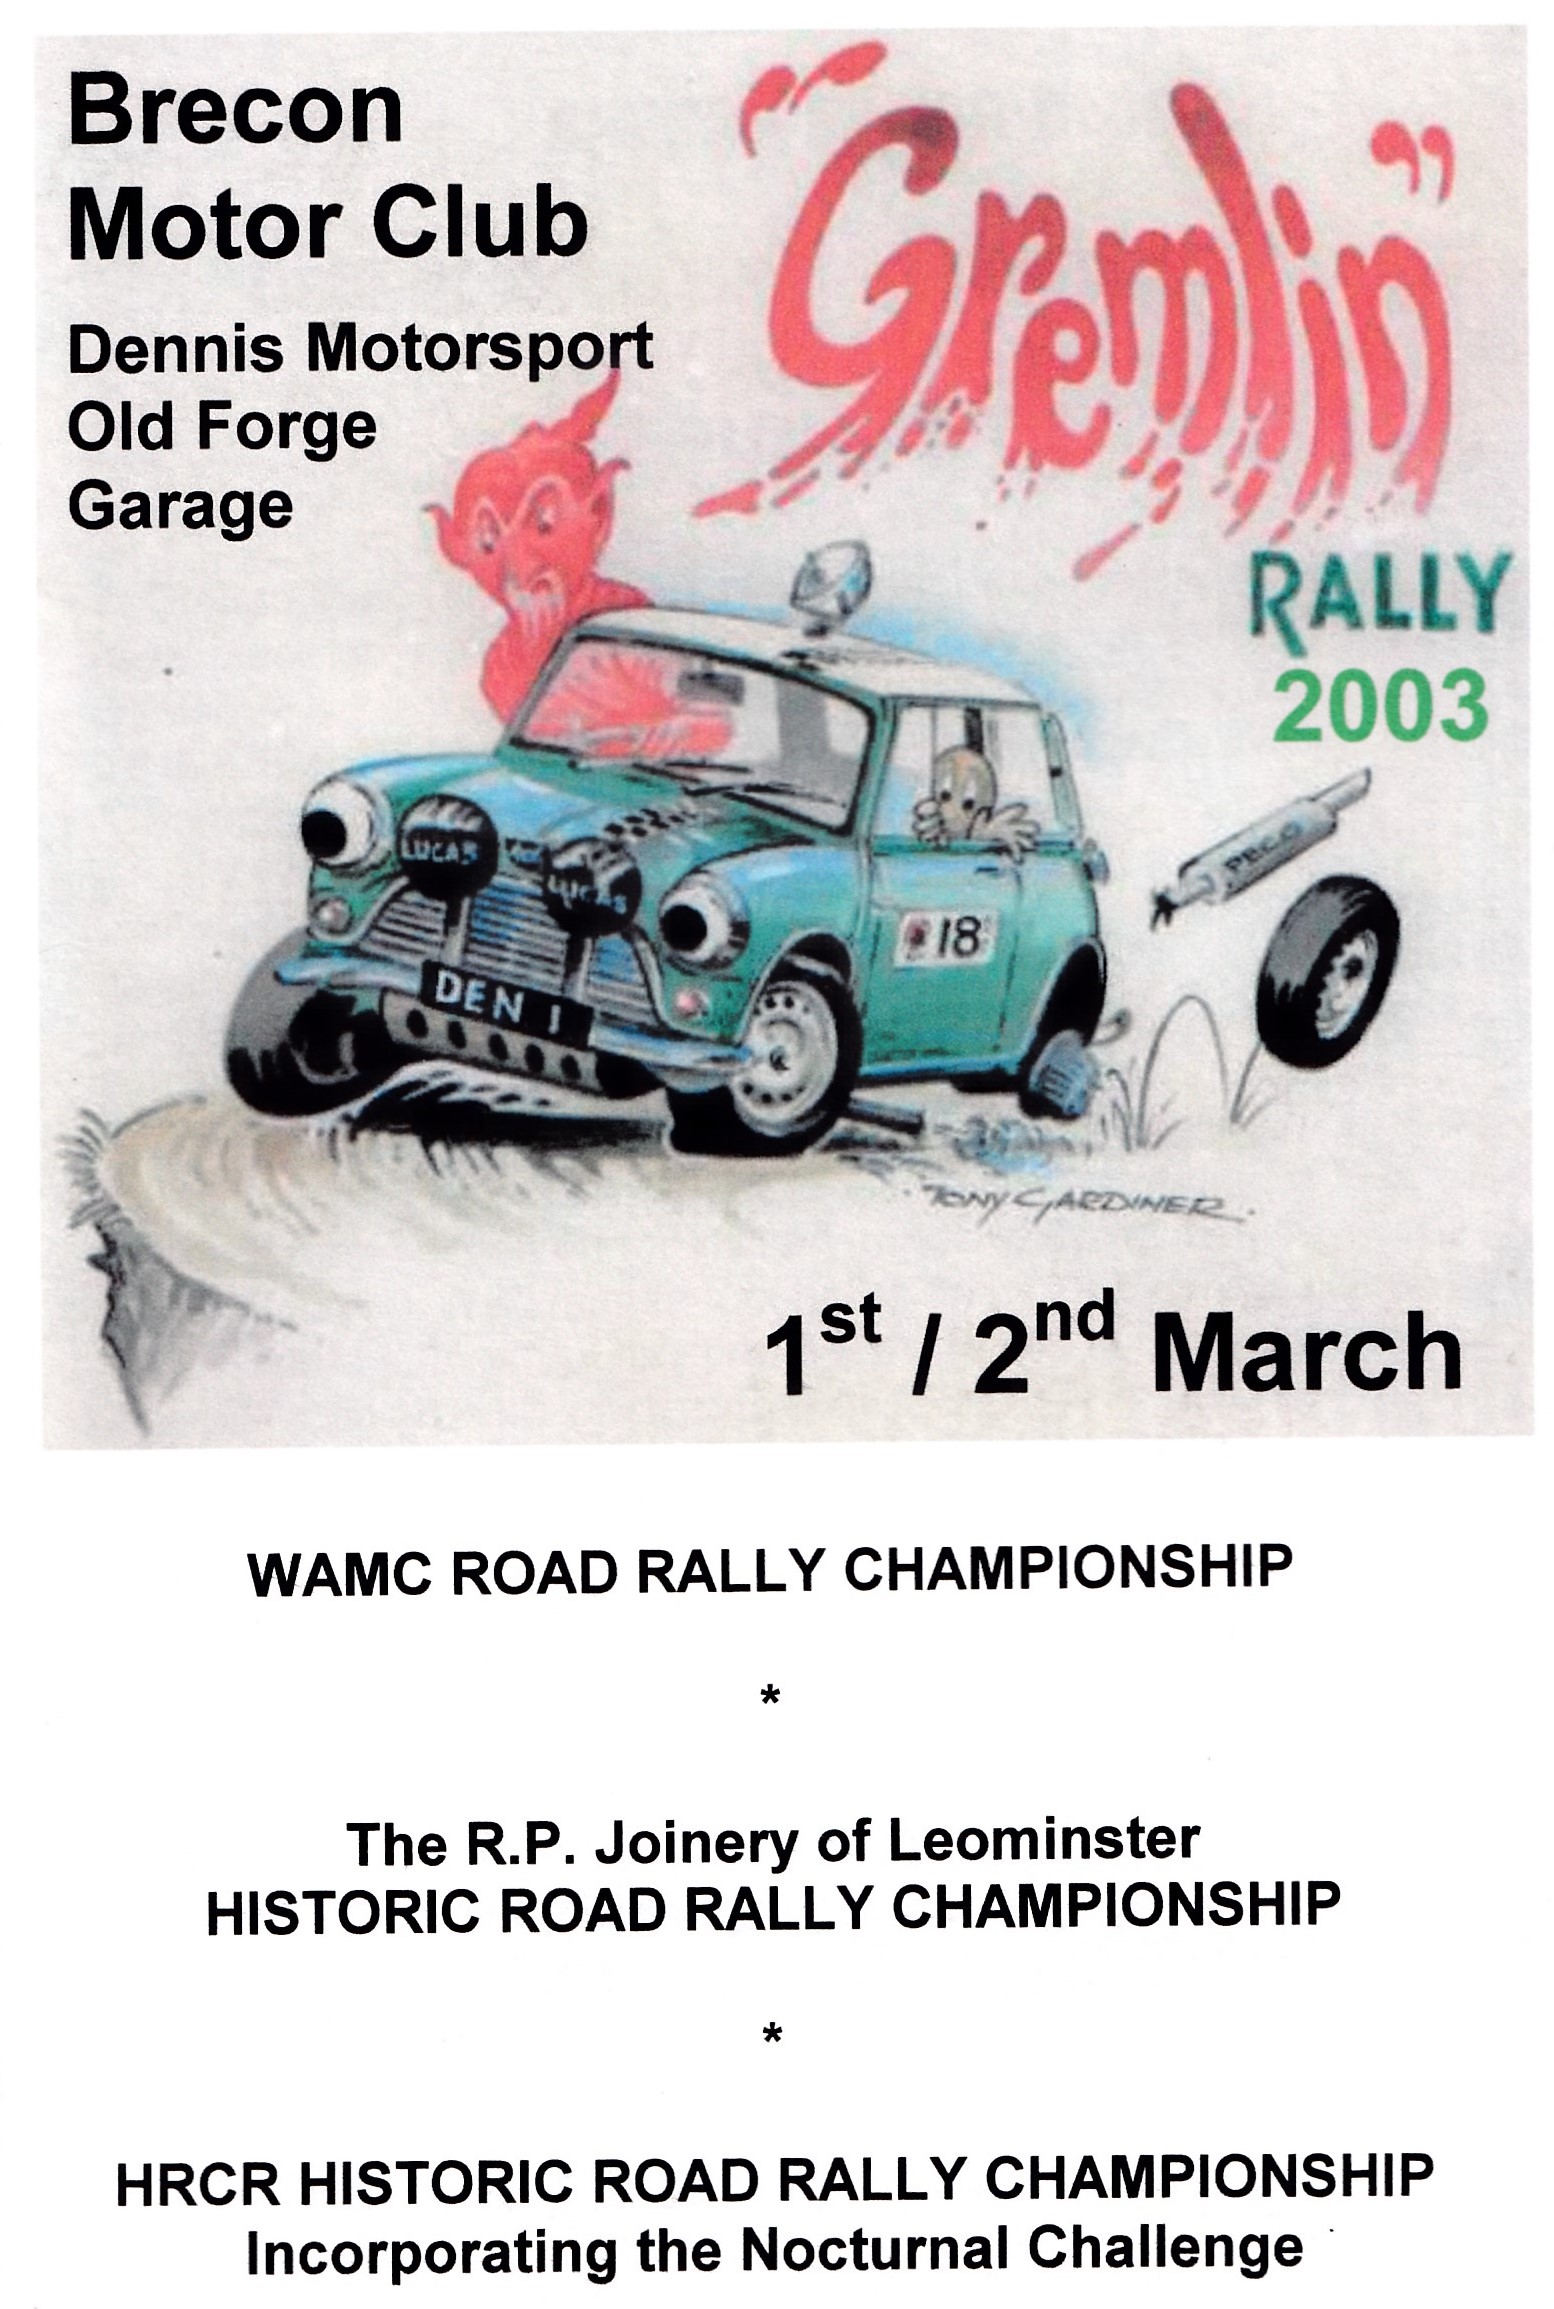 Gremlin Rally 2003